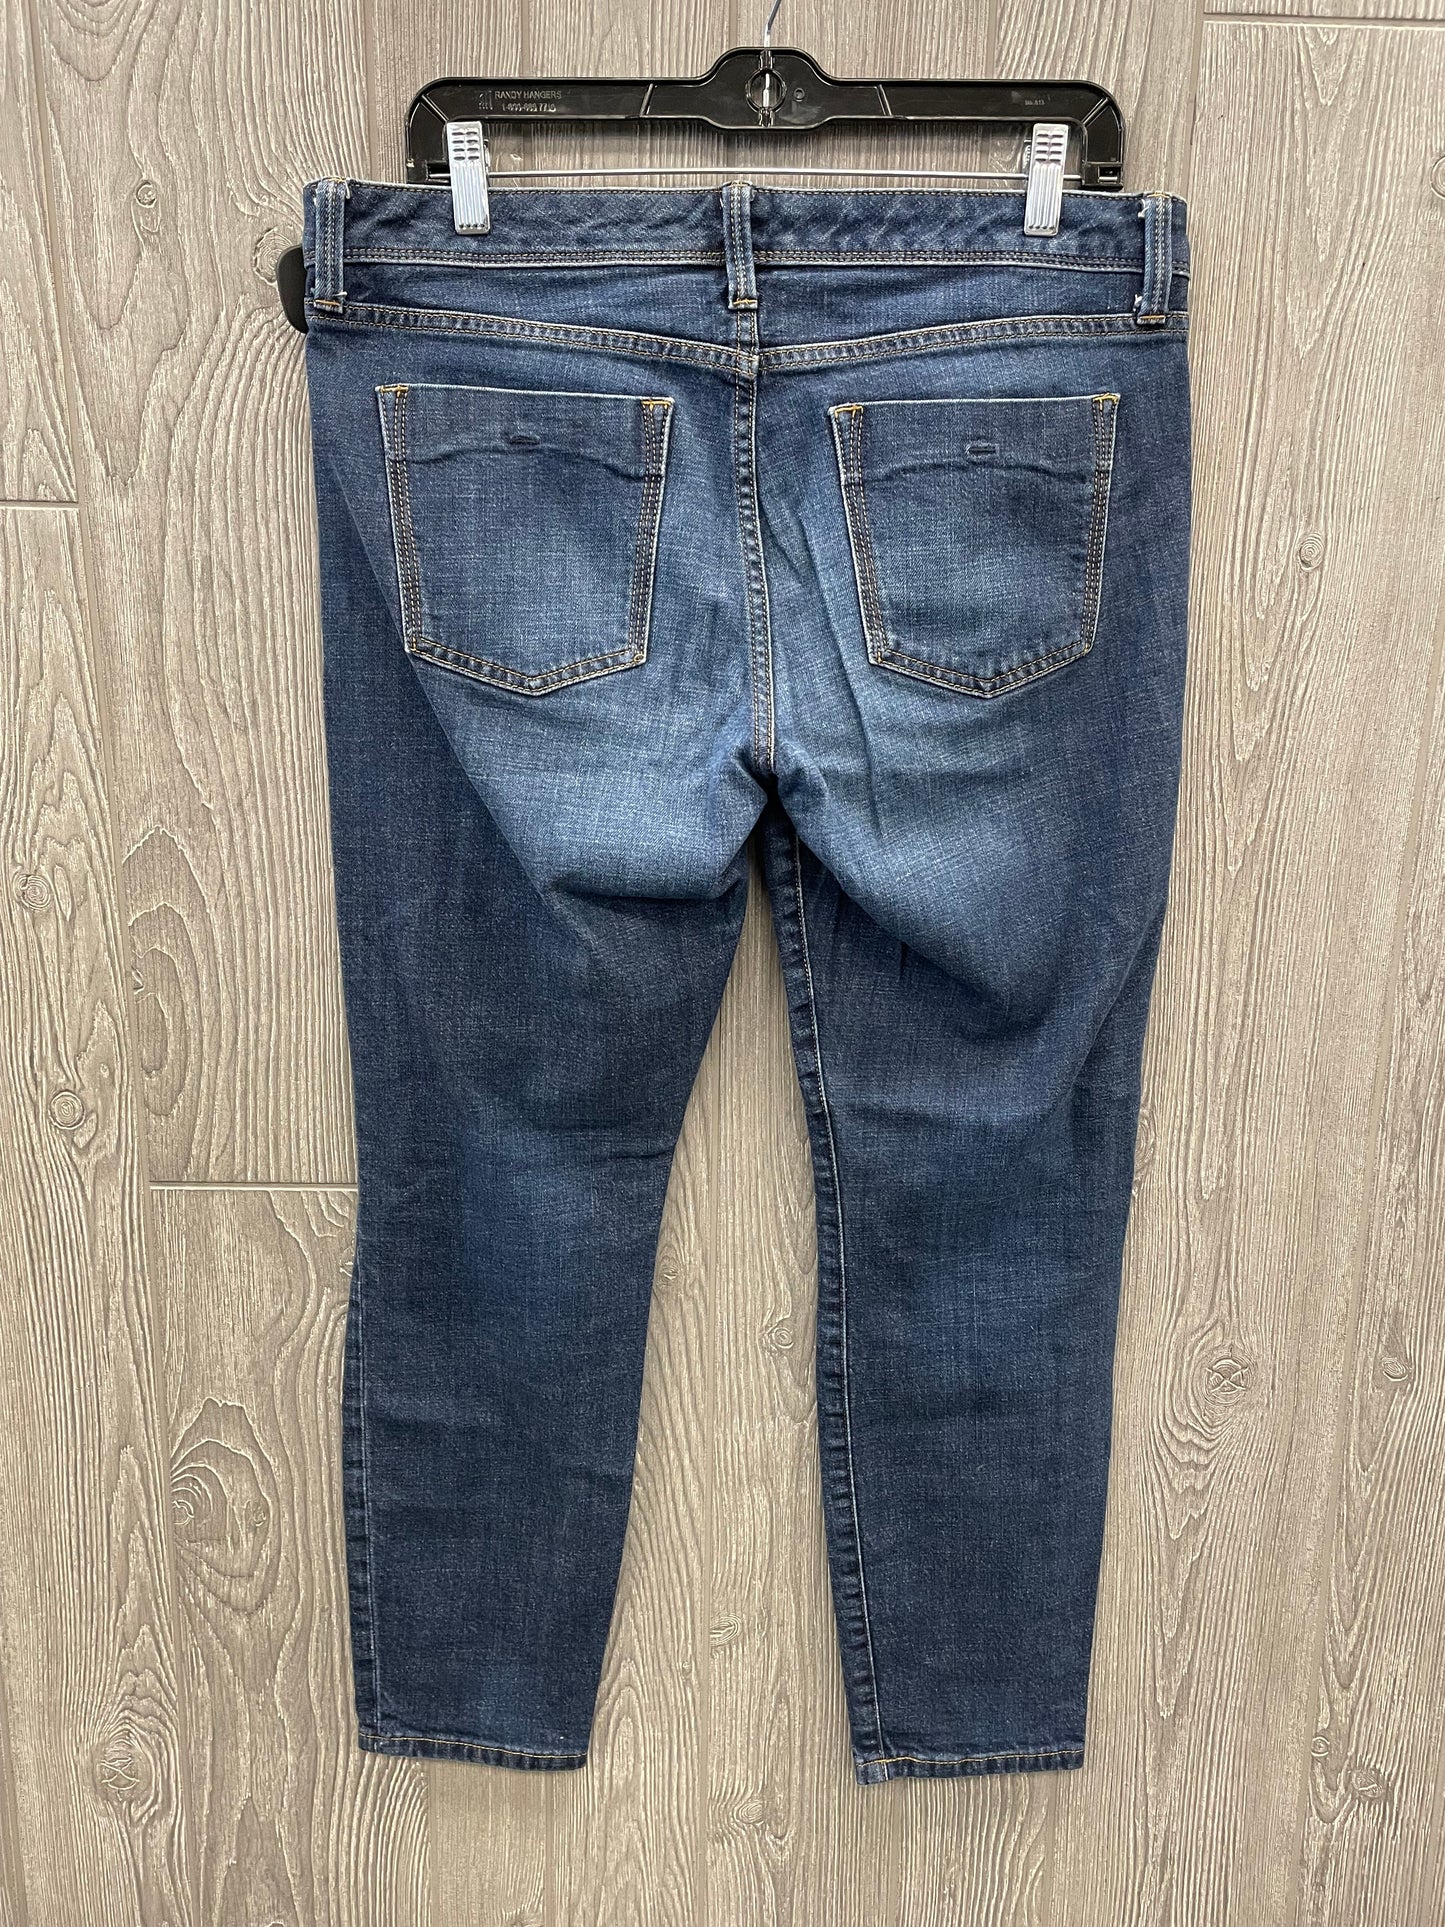 Jeans Skinny By Banana Republic  Size: 10